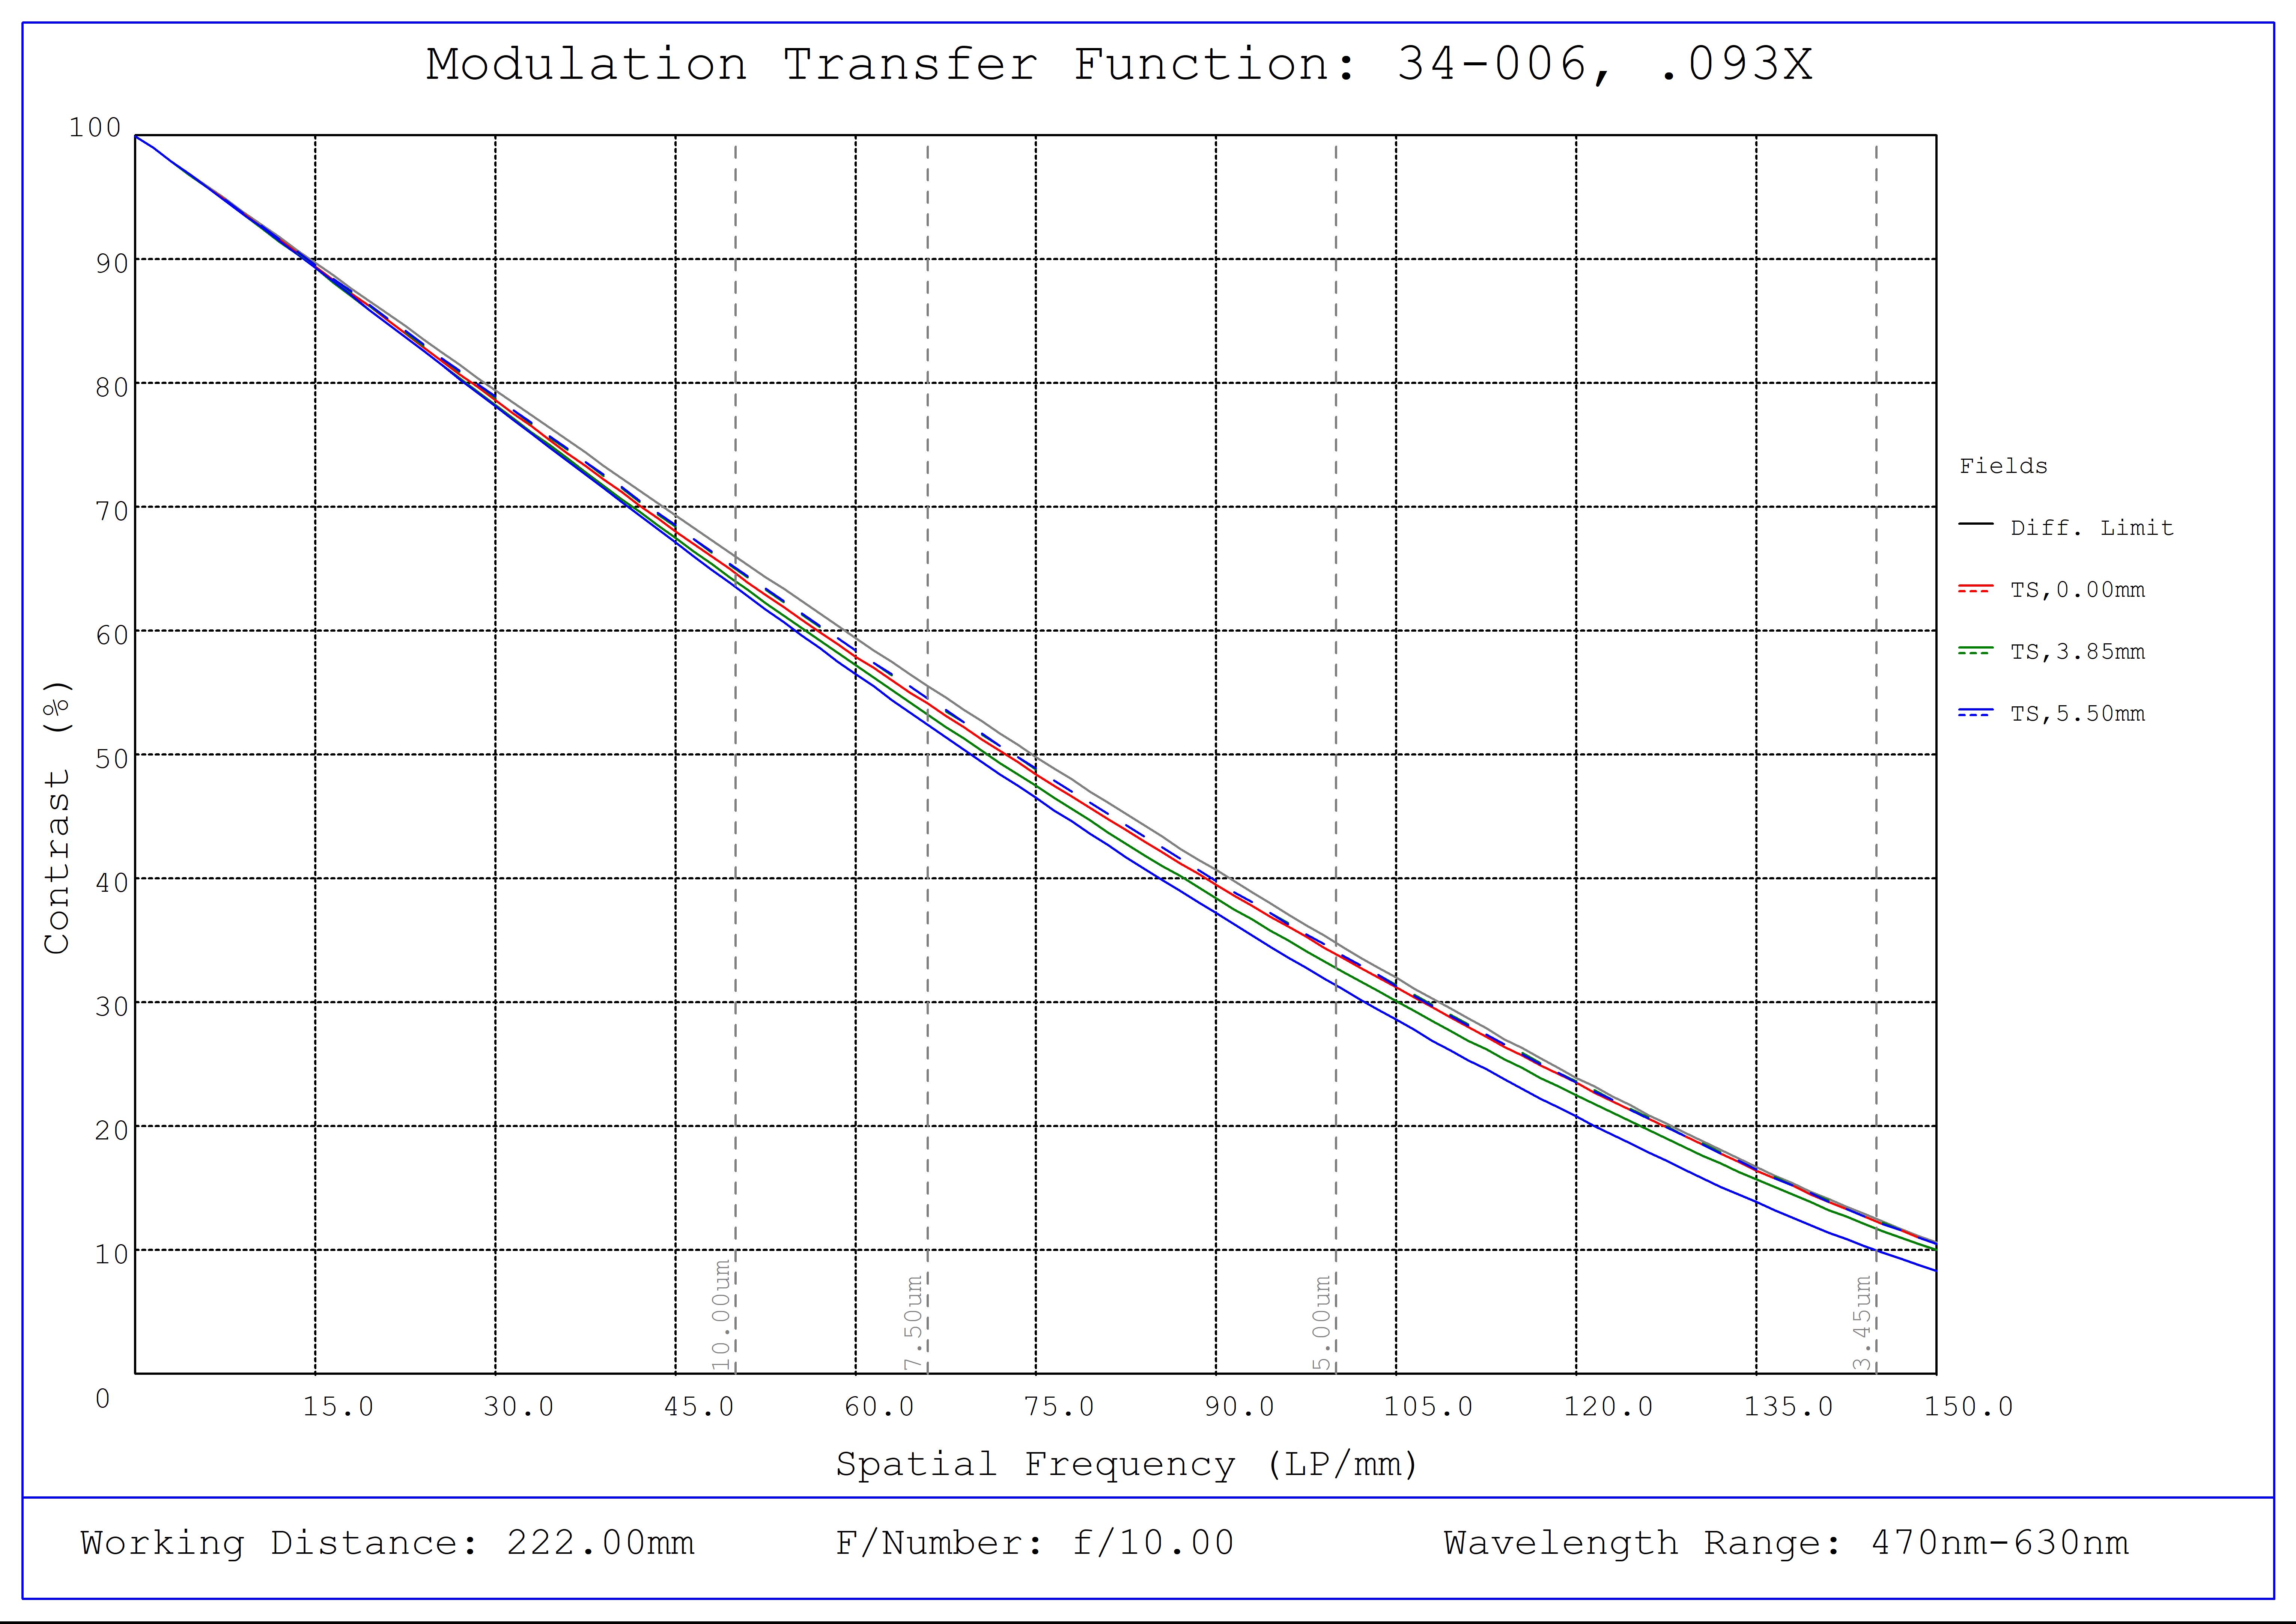 #34-006, 0.093X, 2/3" C-Mount TitanTL® Telecentric Lens, Modulated Transfer Function (MTF) Plot, 222mm Working Distance, f10